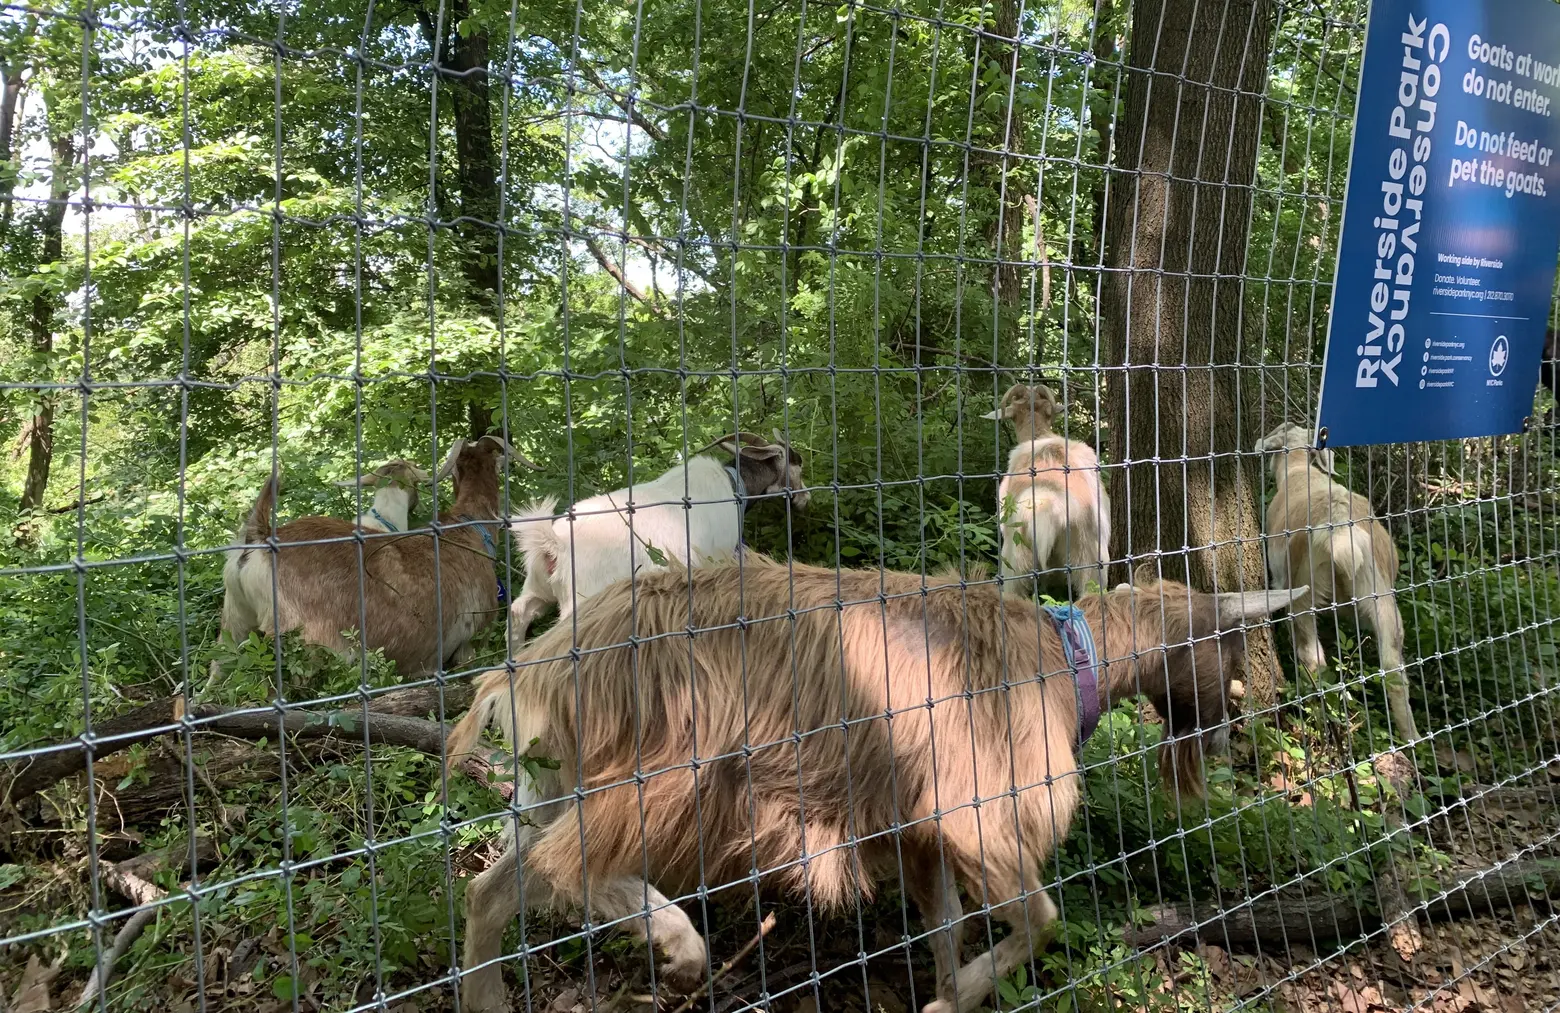 24 weed-eating goats have arrived in Riverside Park